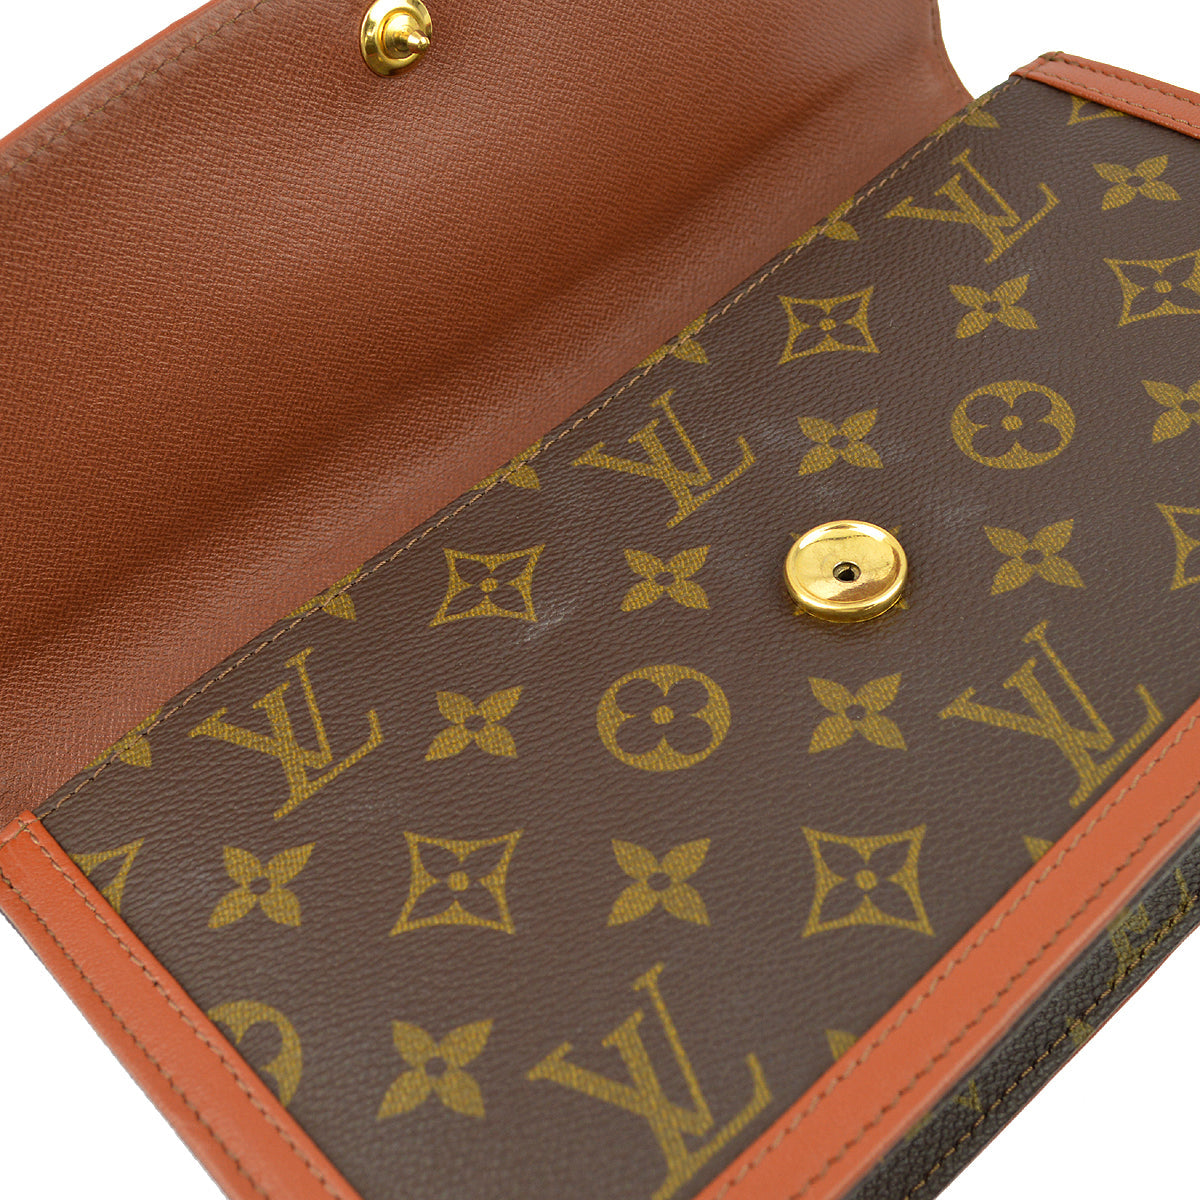 Louis Vuitton Monogram Pochette Dam PM Clutch Handbag M51812